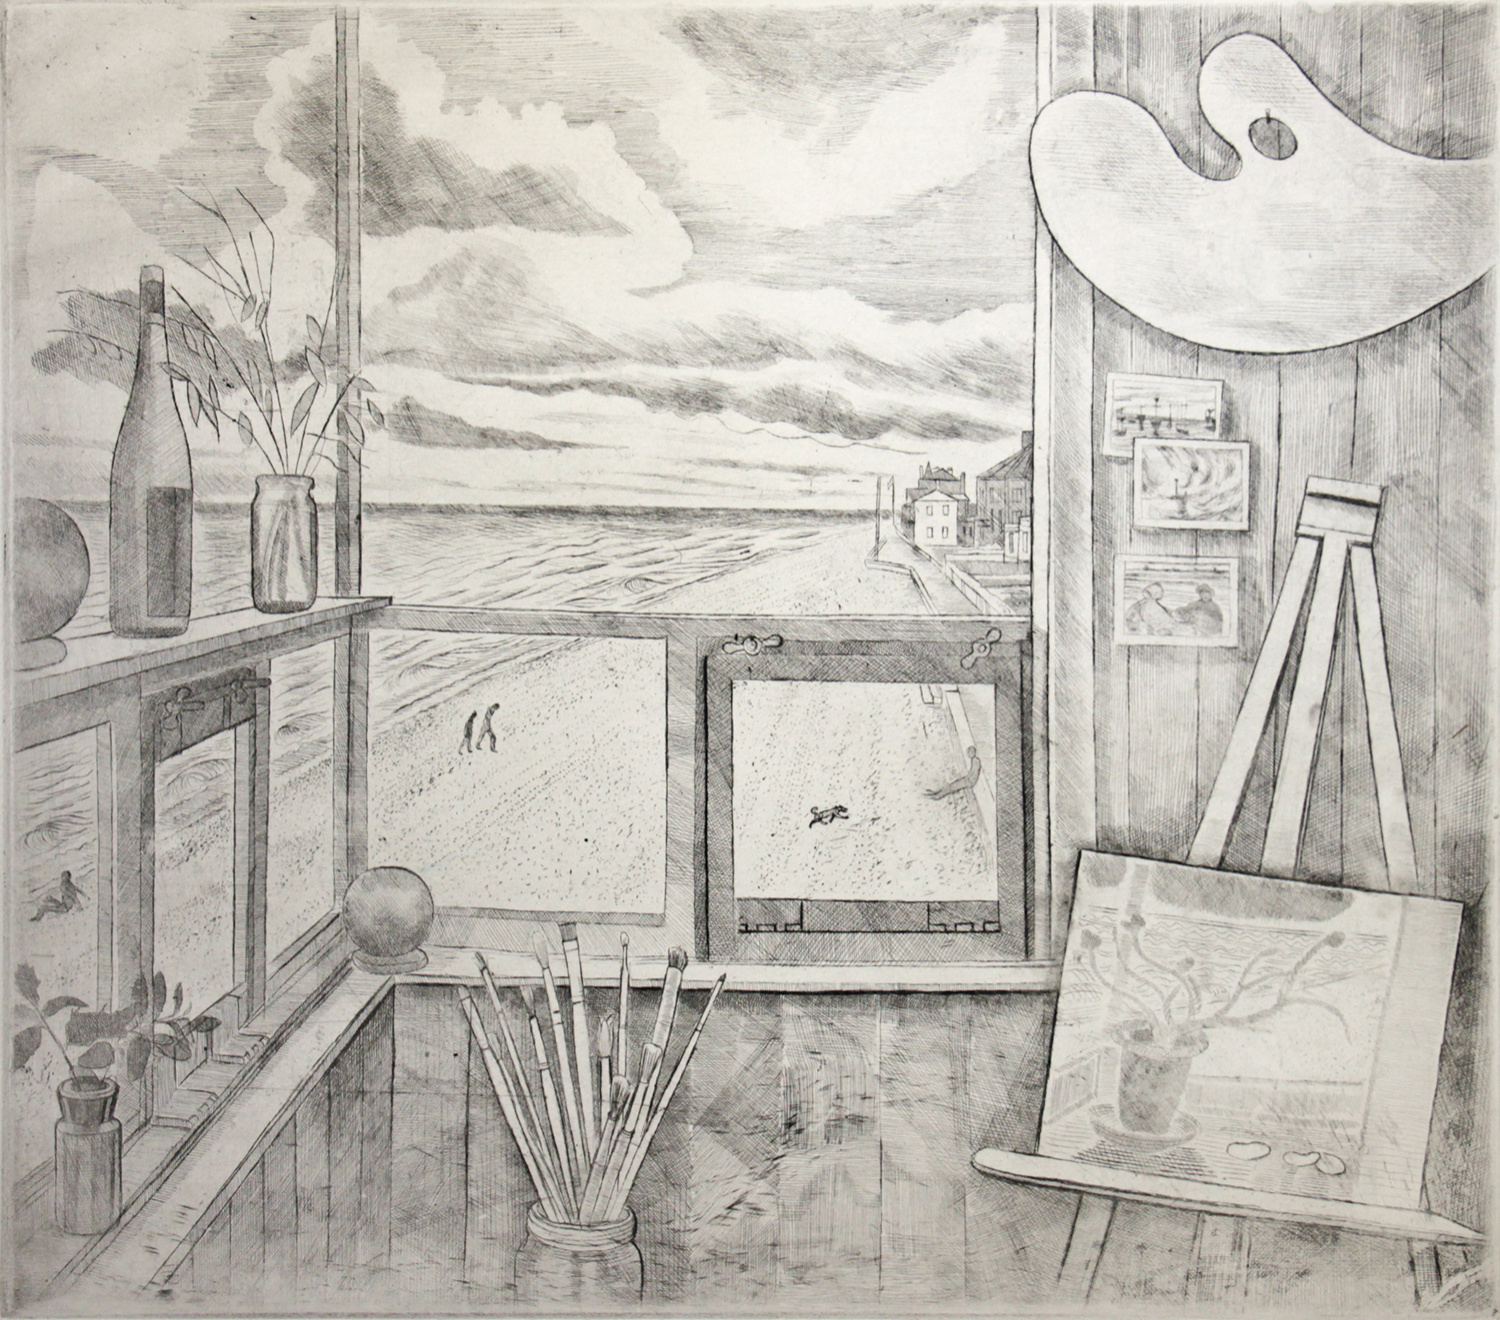 Studio in the Sky by Richard Bawden